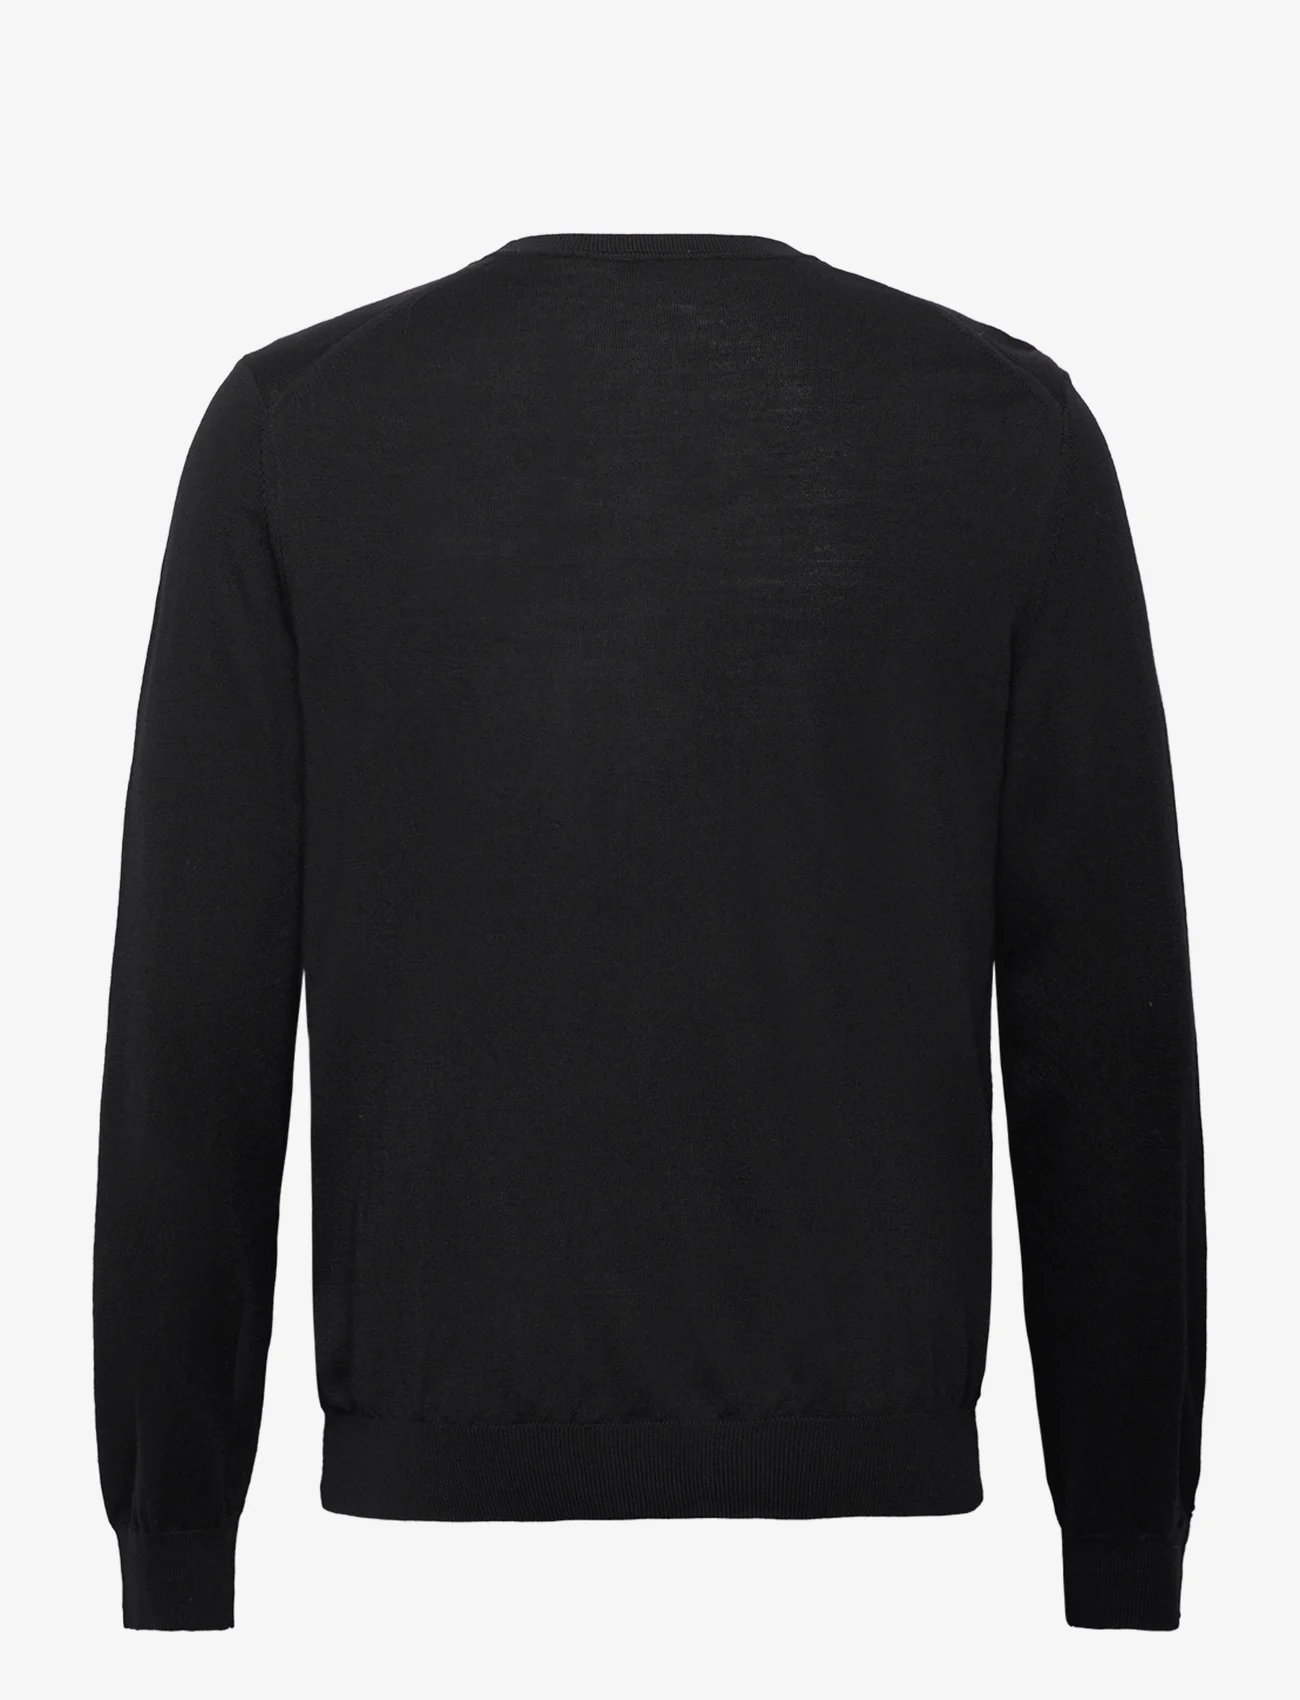 Mango - Merino wool washable sweater - rund hals - black - 1